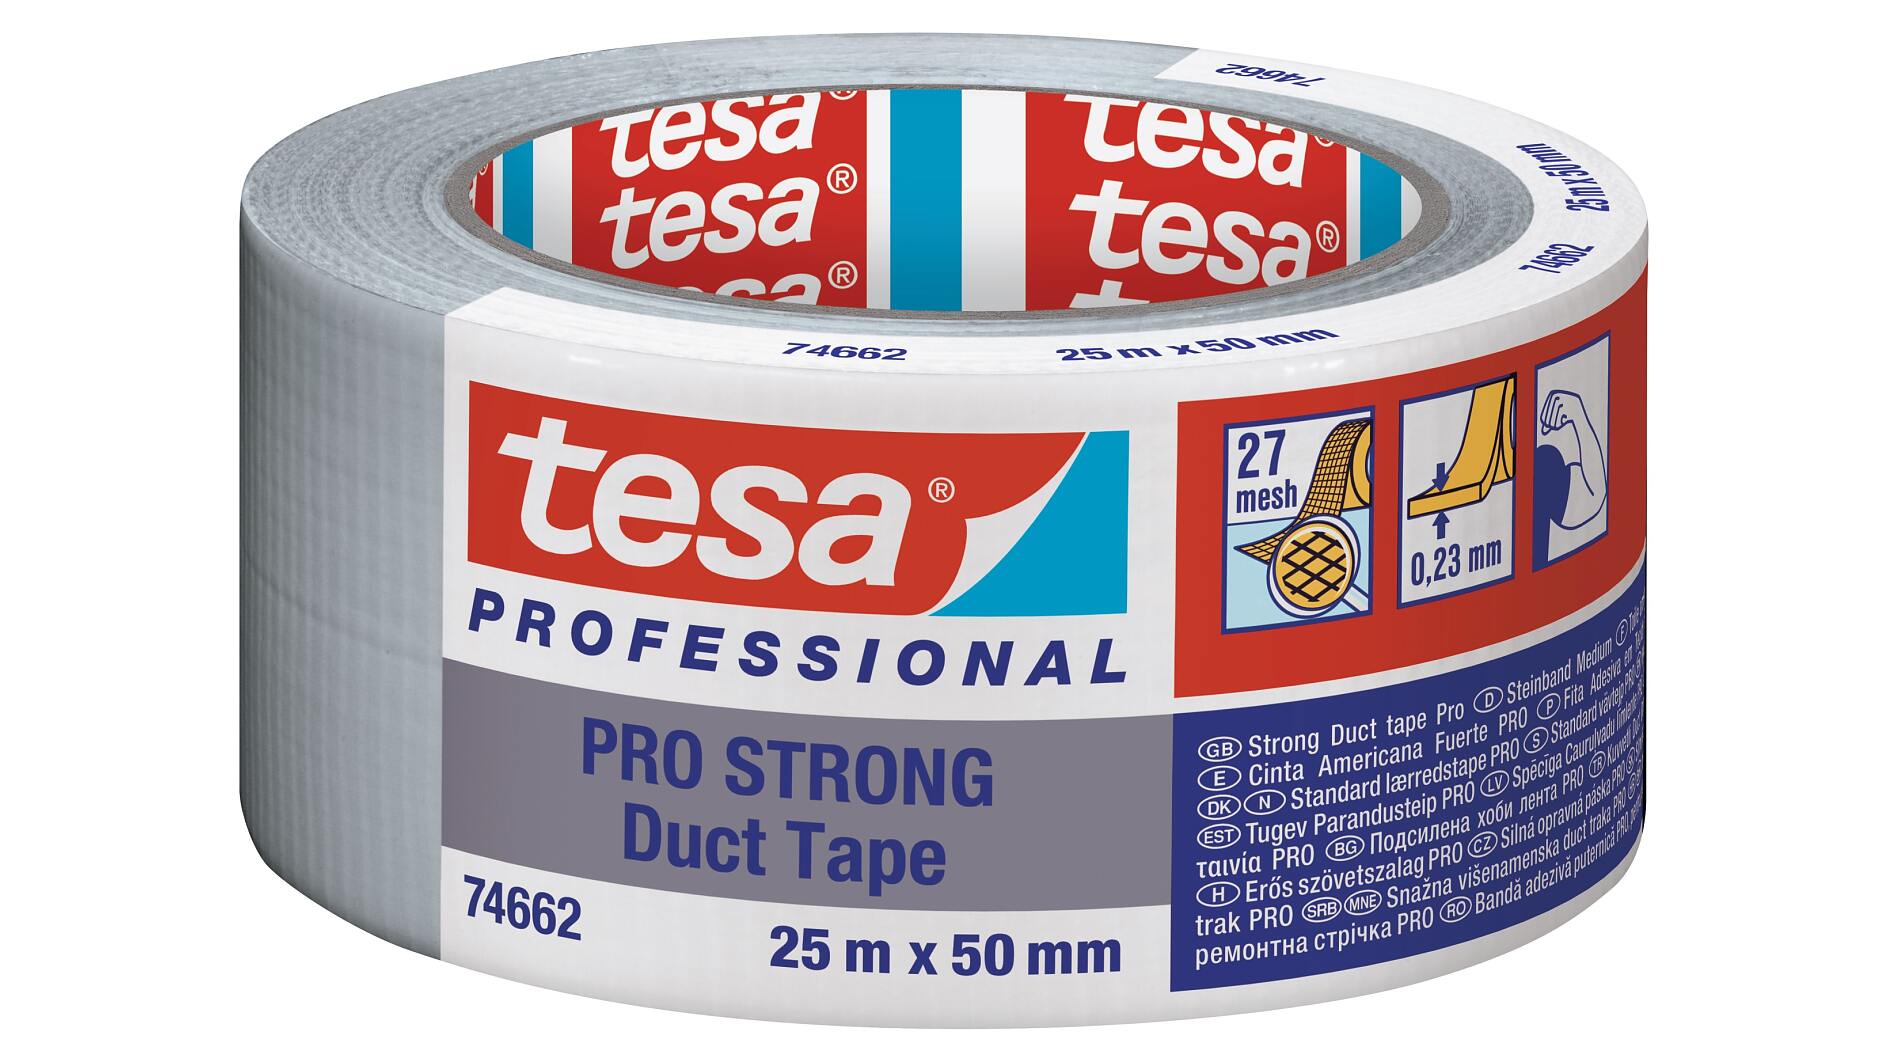 tesa® PRO 74662 STRONG Duct Tape - tesa